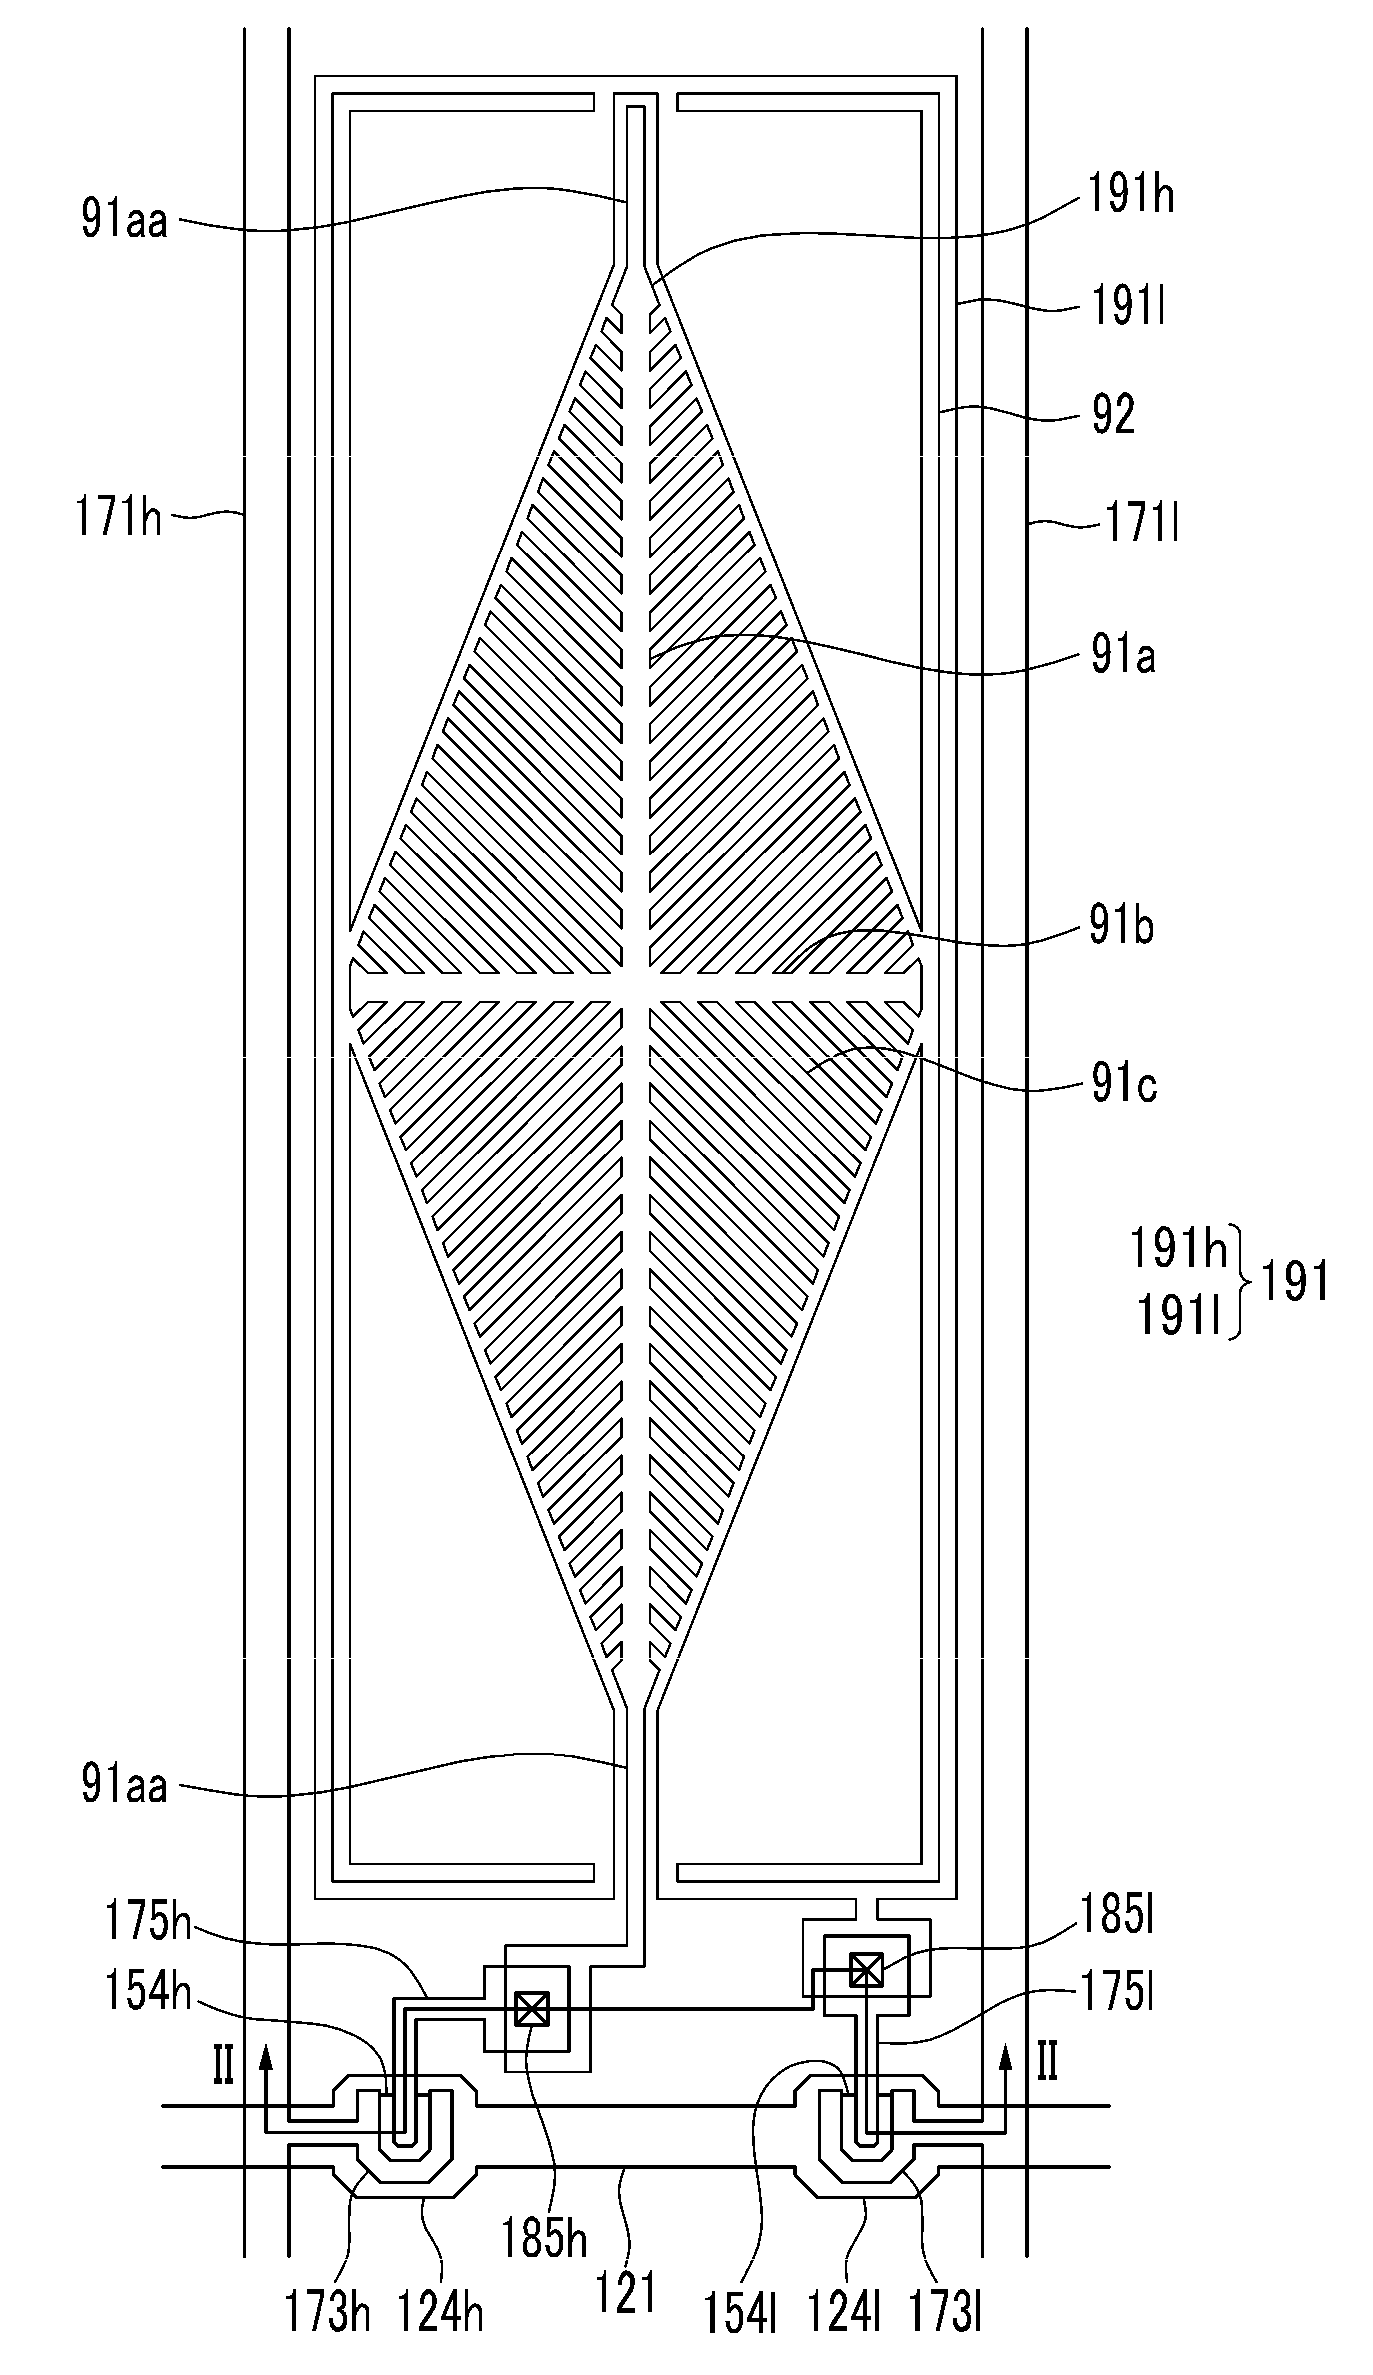 Liquid crystal display having particular pixel structure